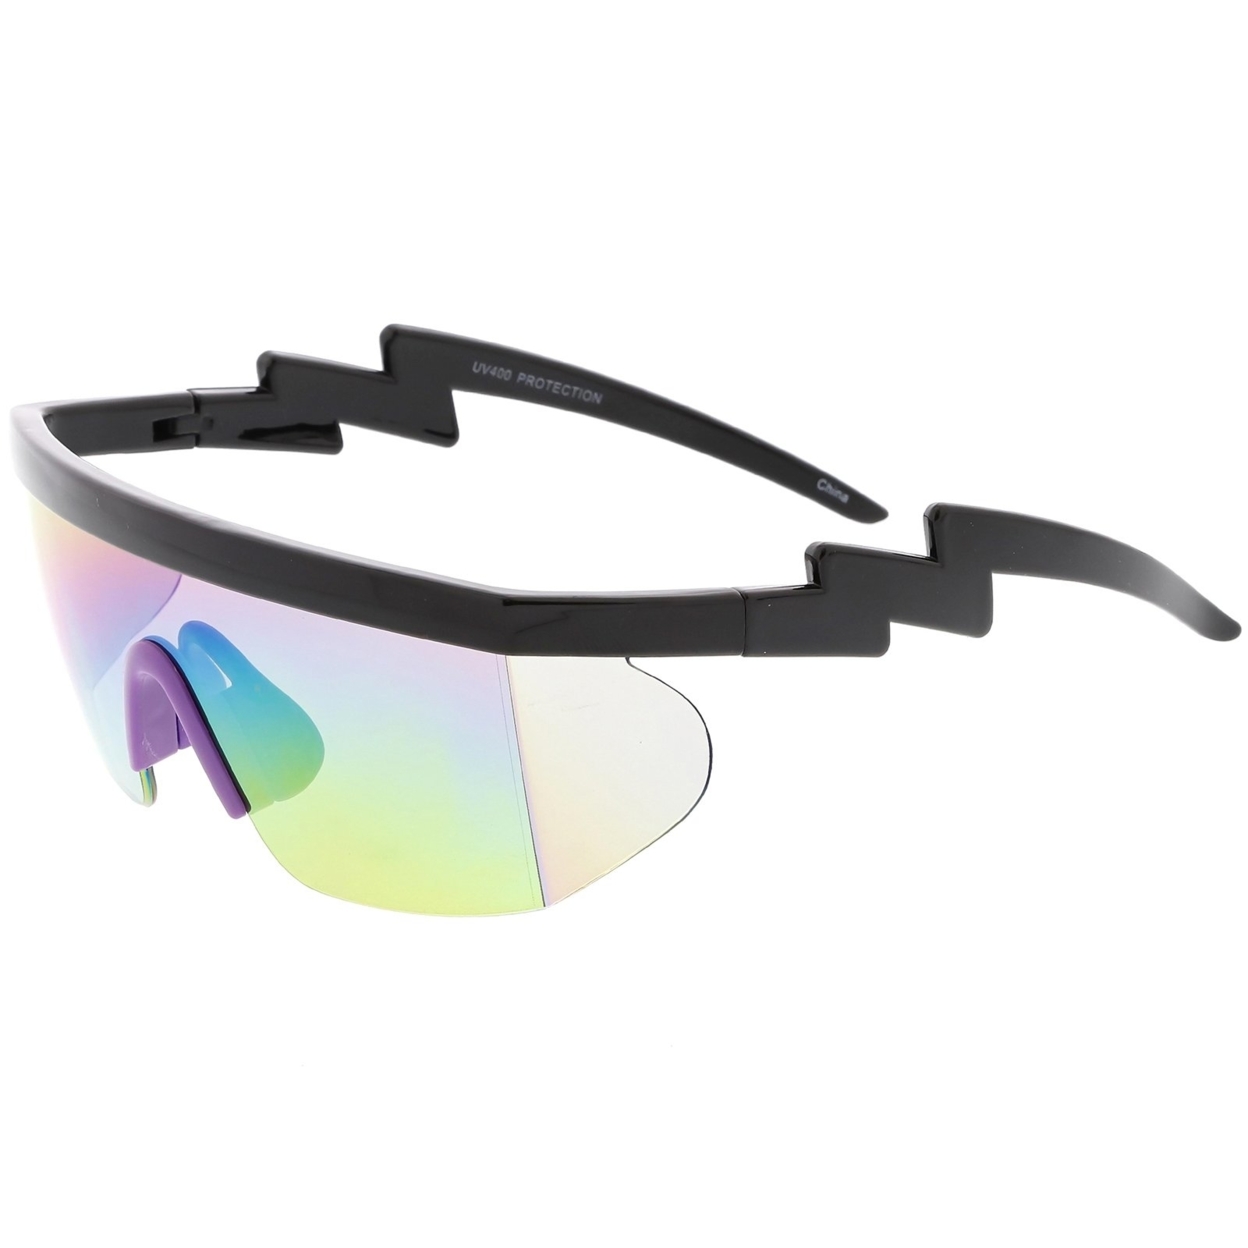 Oversize Semi Rimless Goggle Shield Sunglasses Mirrored Lens 60mm - Black Green / Rainbow